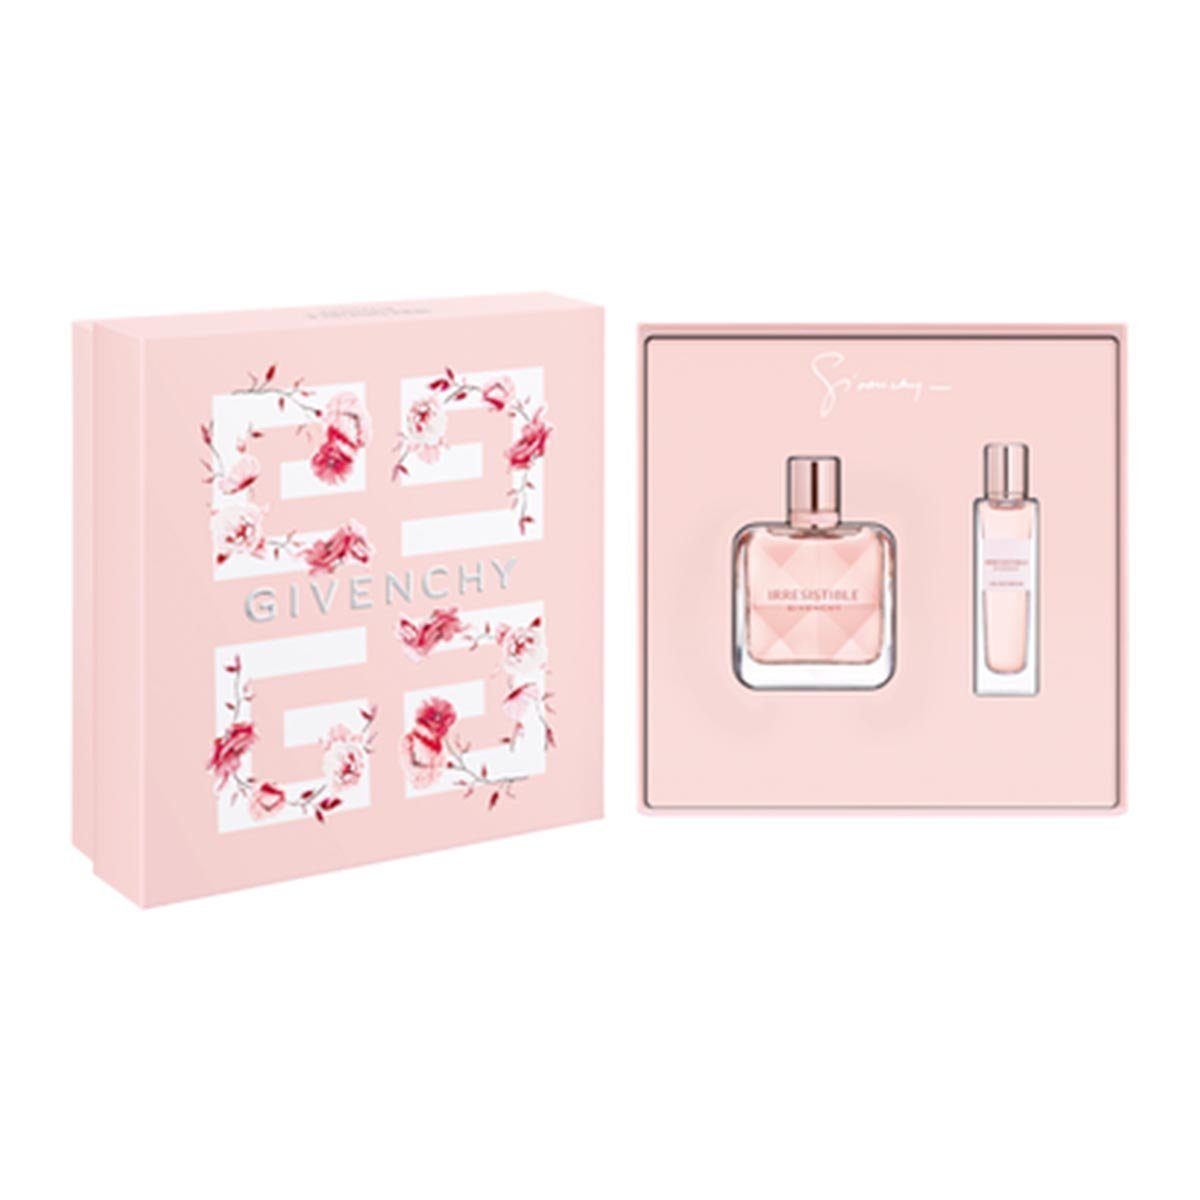 Givenchy Irresistible EDP Gift Set - My Perfume Shop Australia